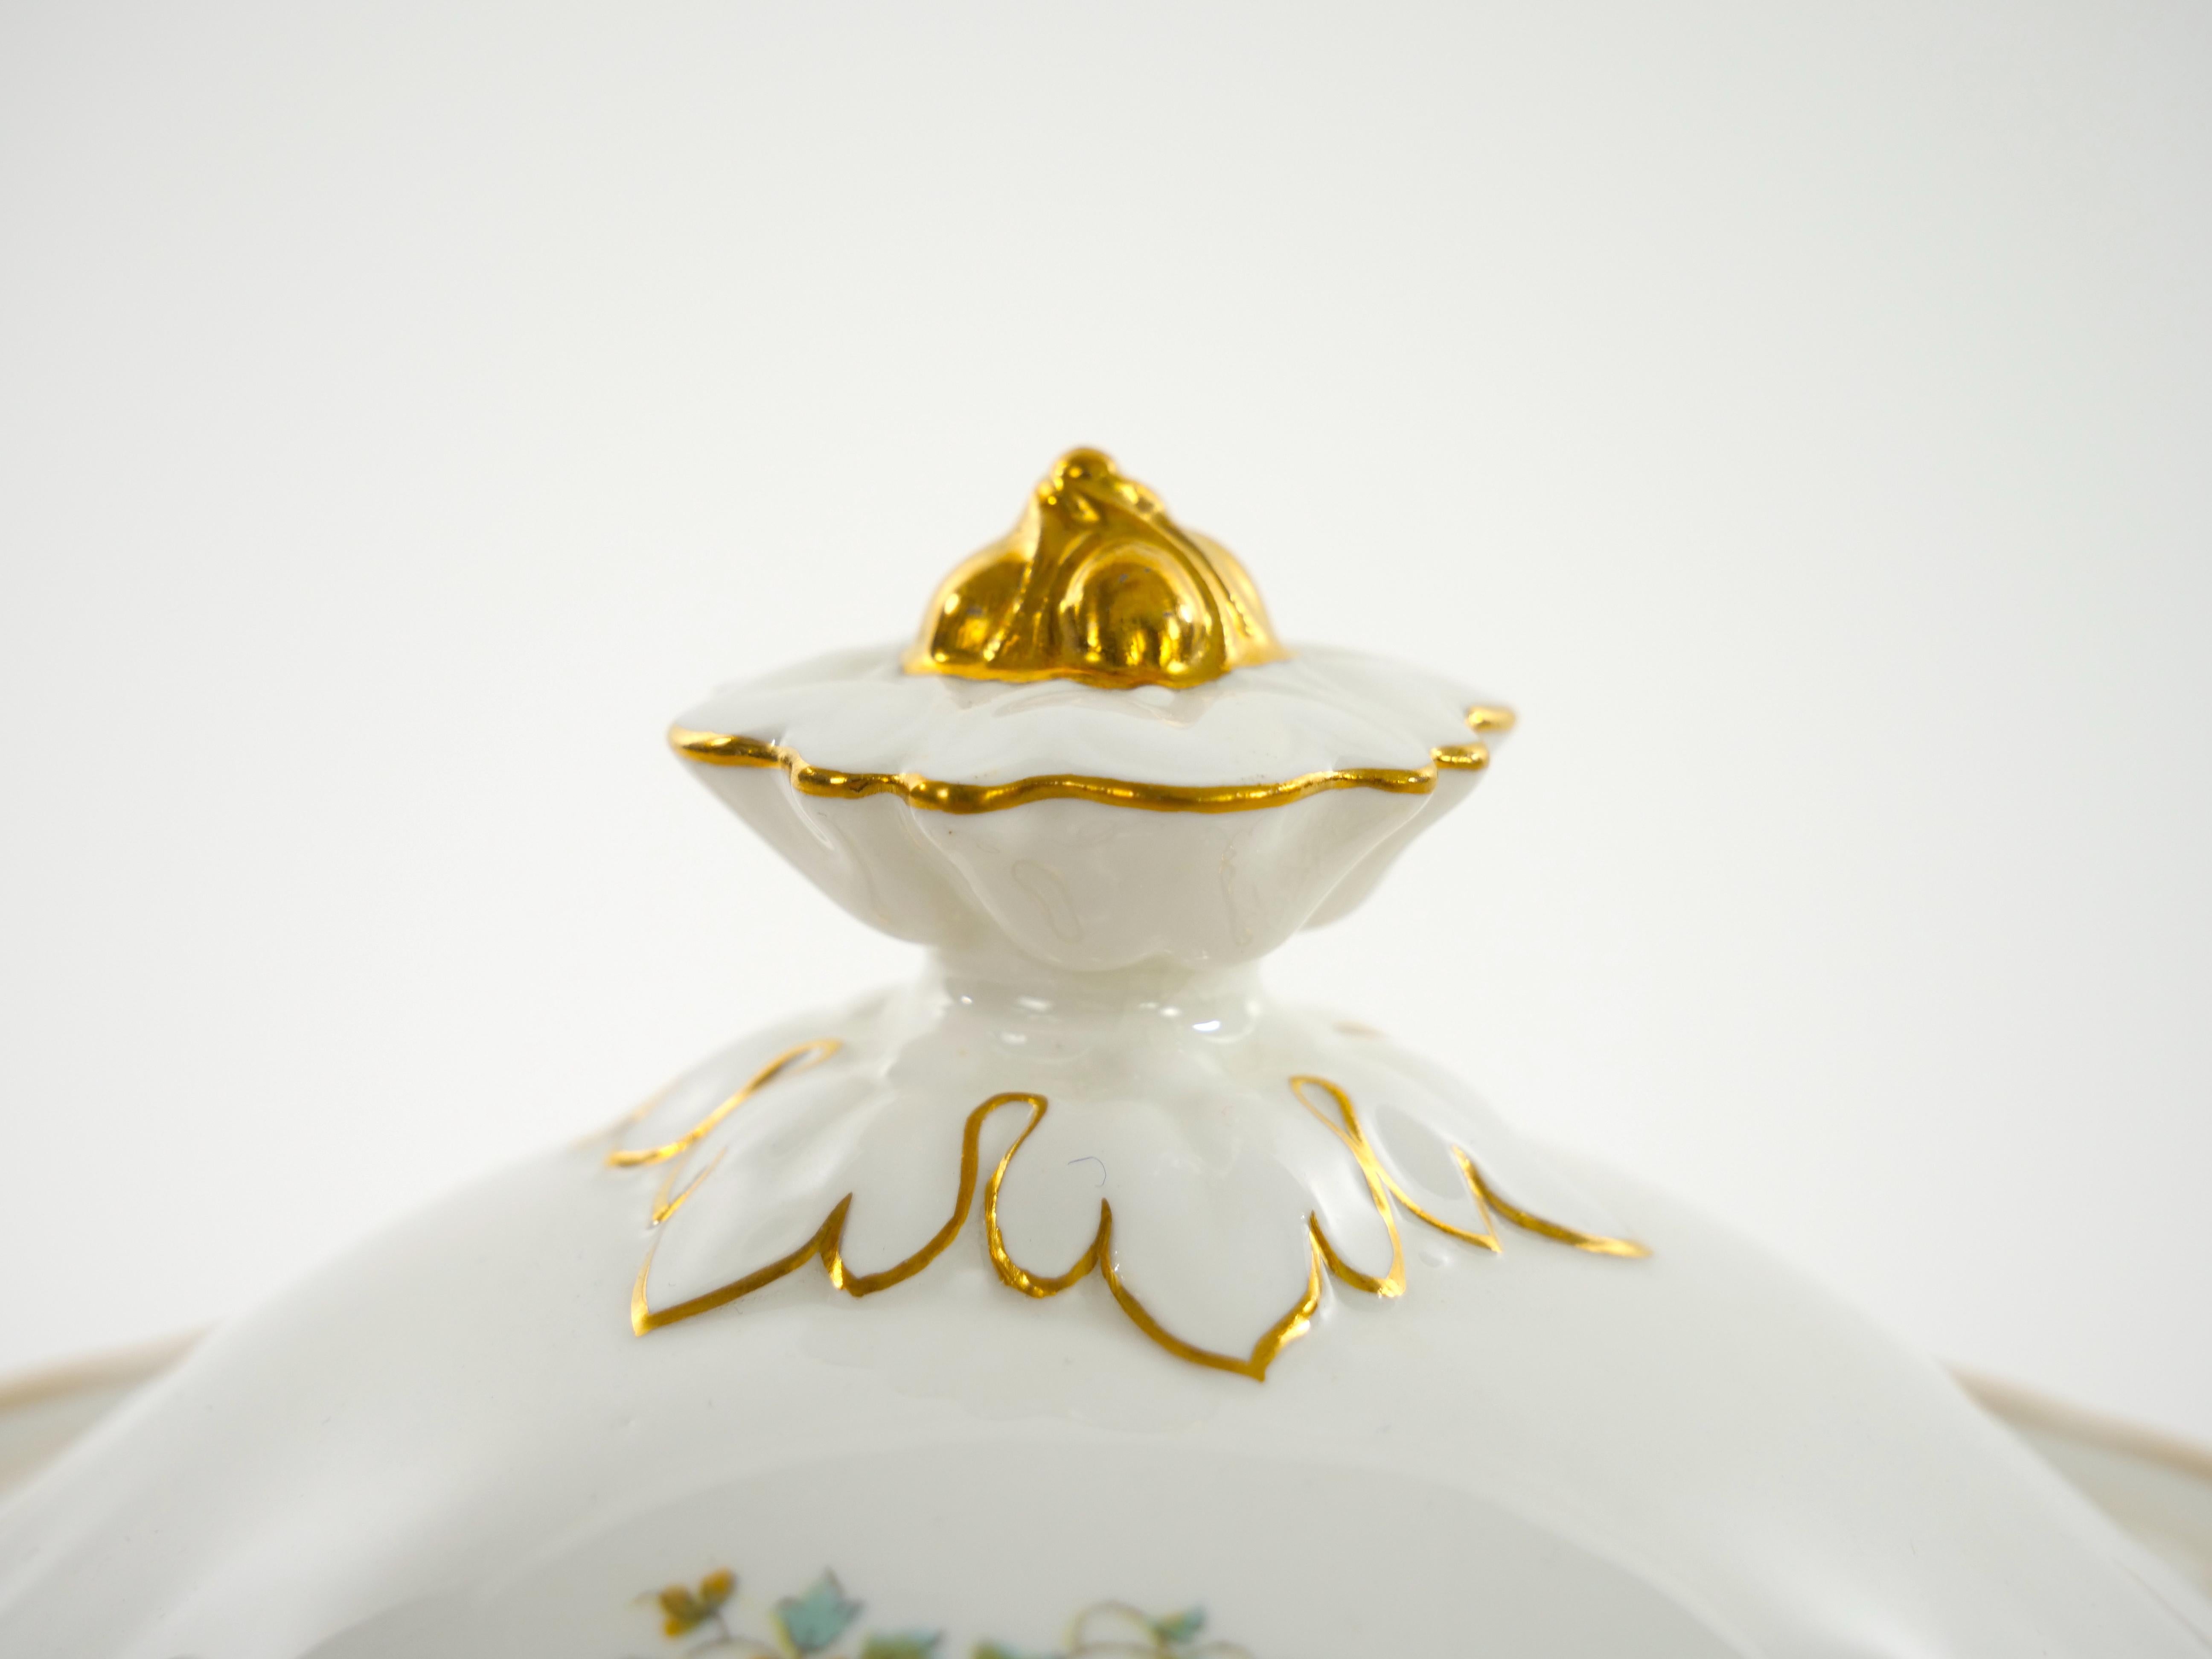 English Royal Crown Derby Porcelain Dinner Service / 16 People For Sale 9